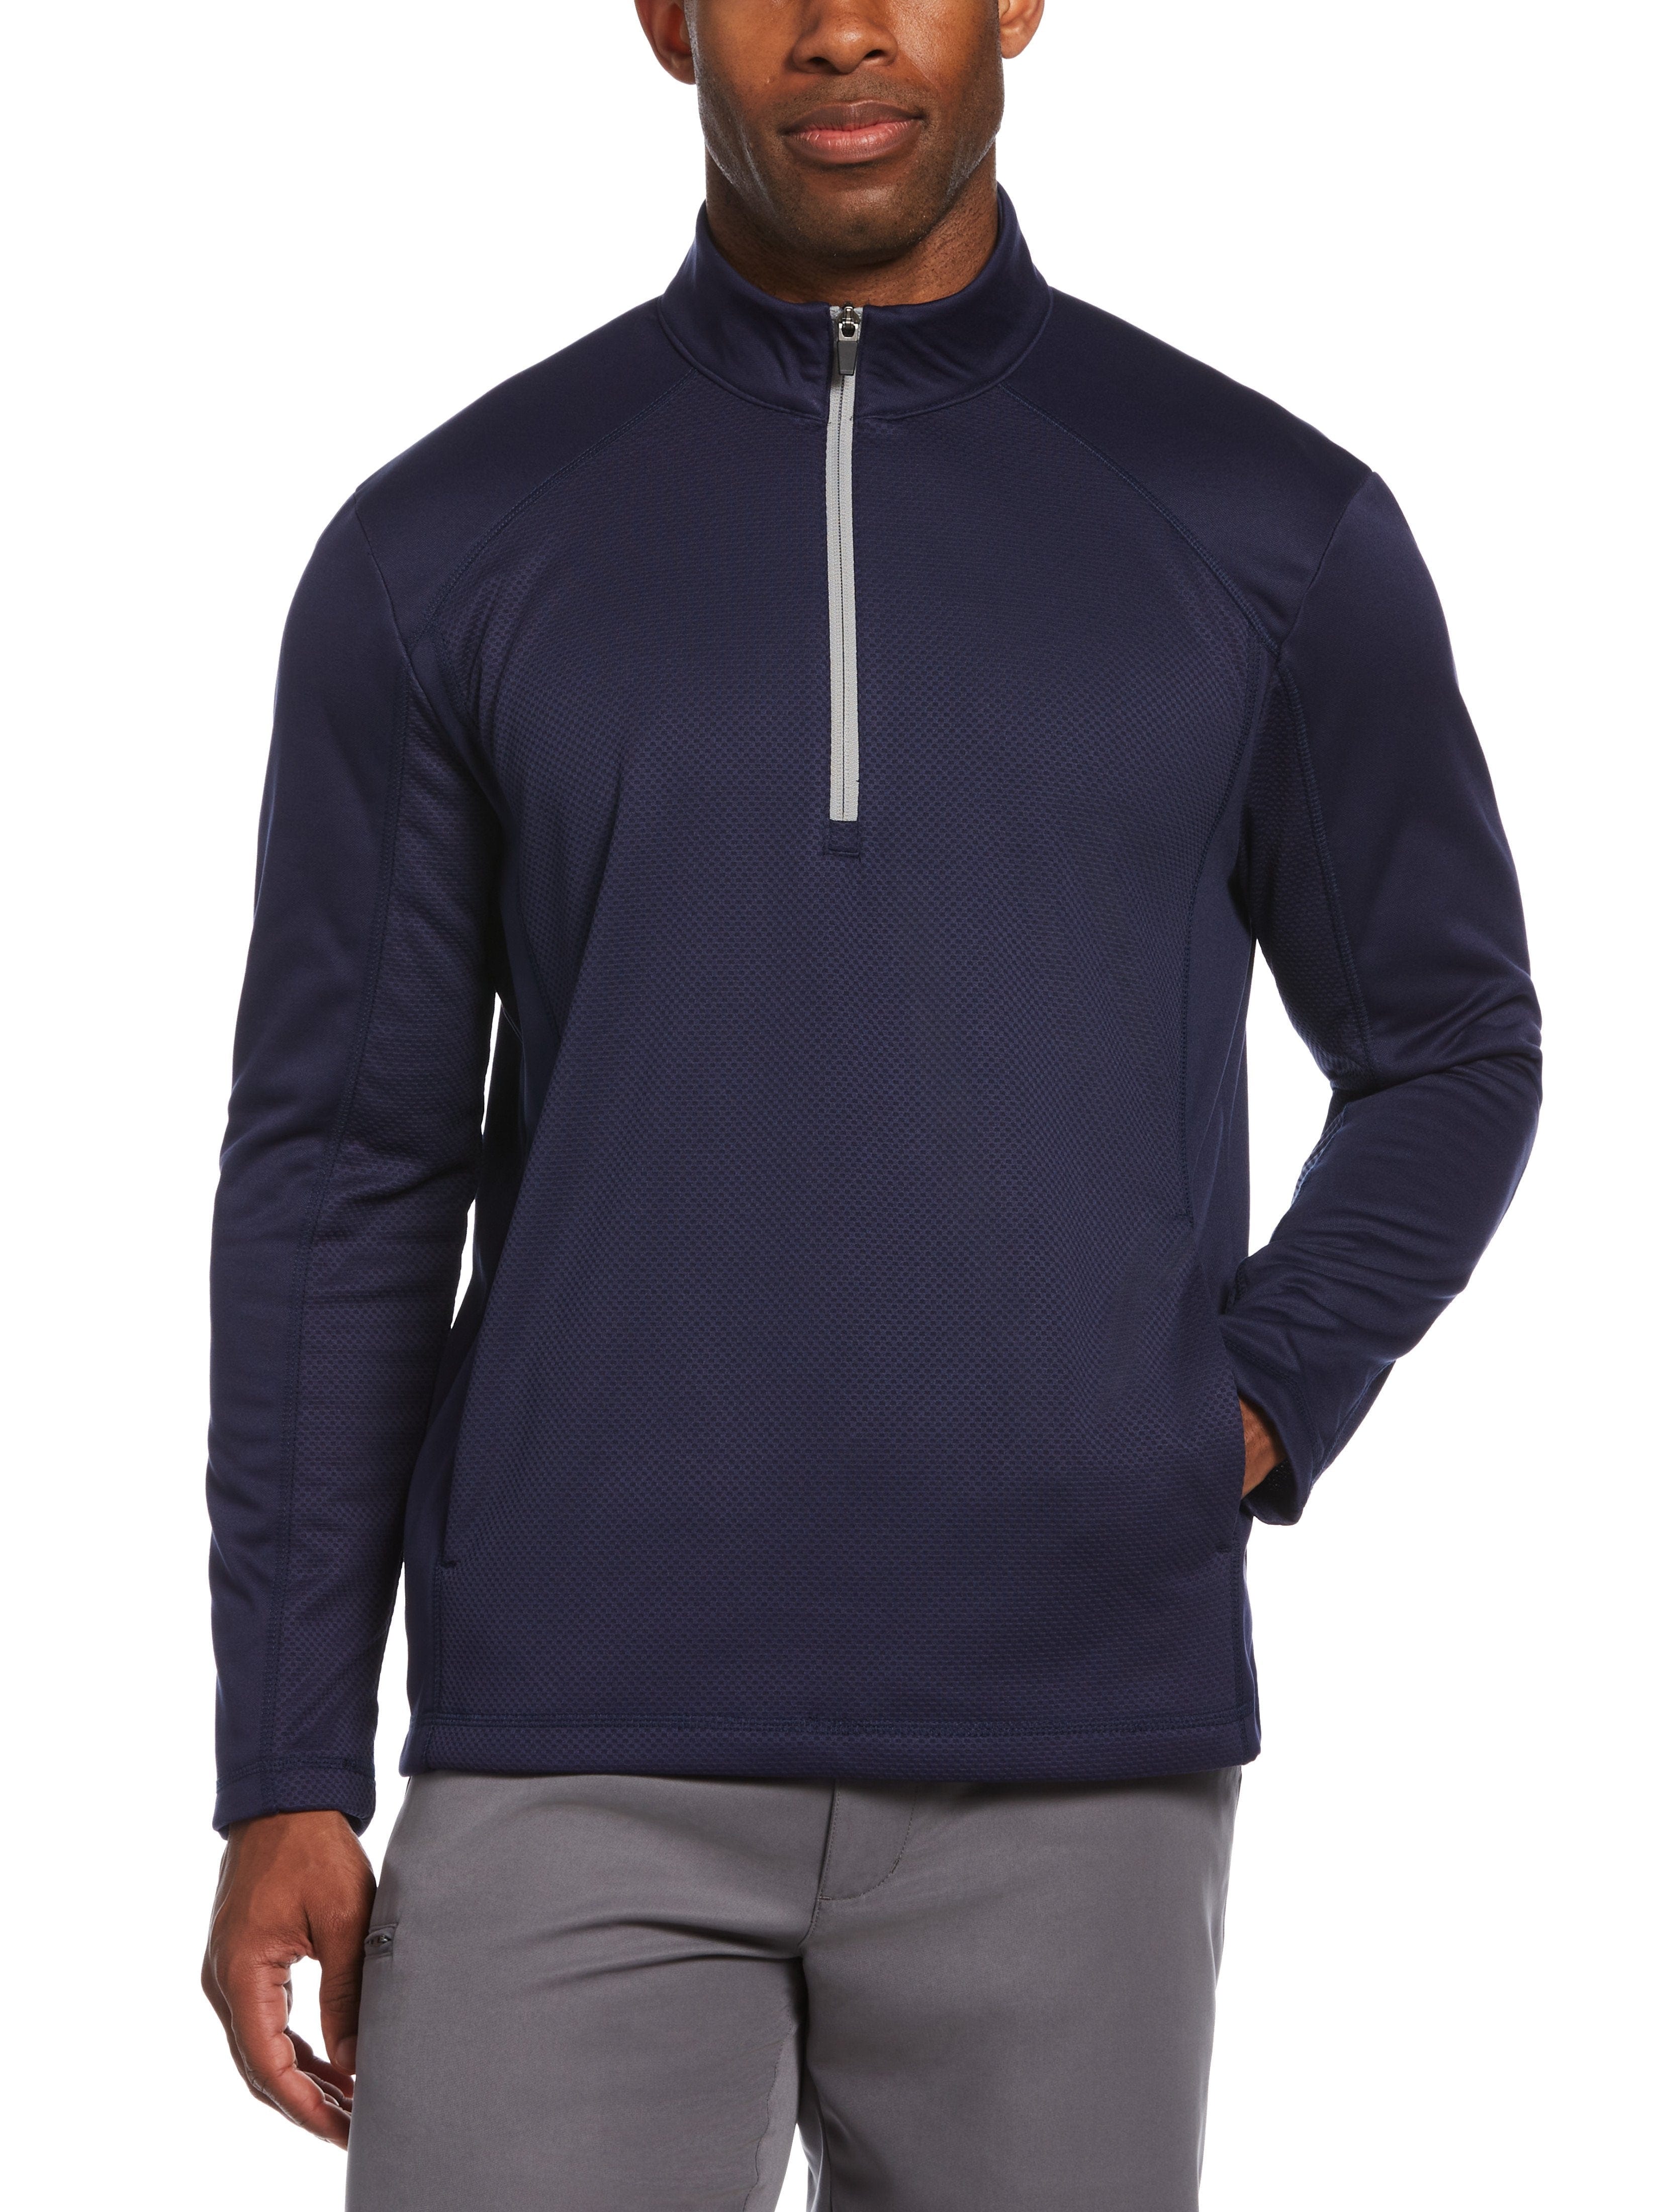 PGA TOUR Apparel Mens Mixed Texture Fleece 1/4 Zip Golf Jacket Top, Size Small, Navy Blue, 100% Polyester | Golf Apparel Shop